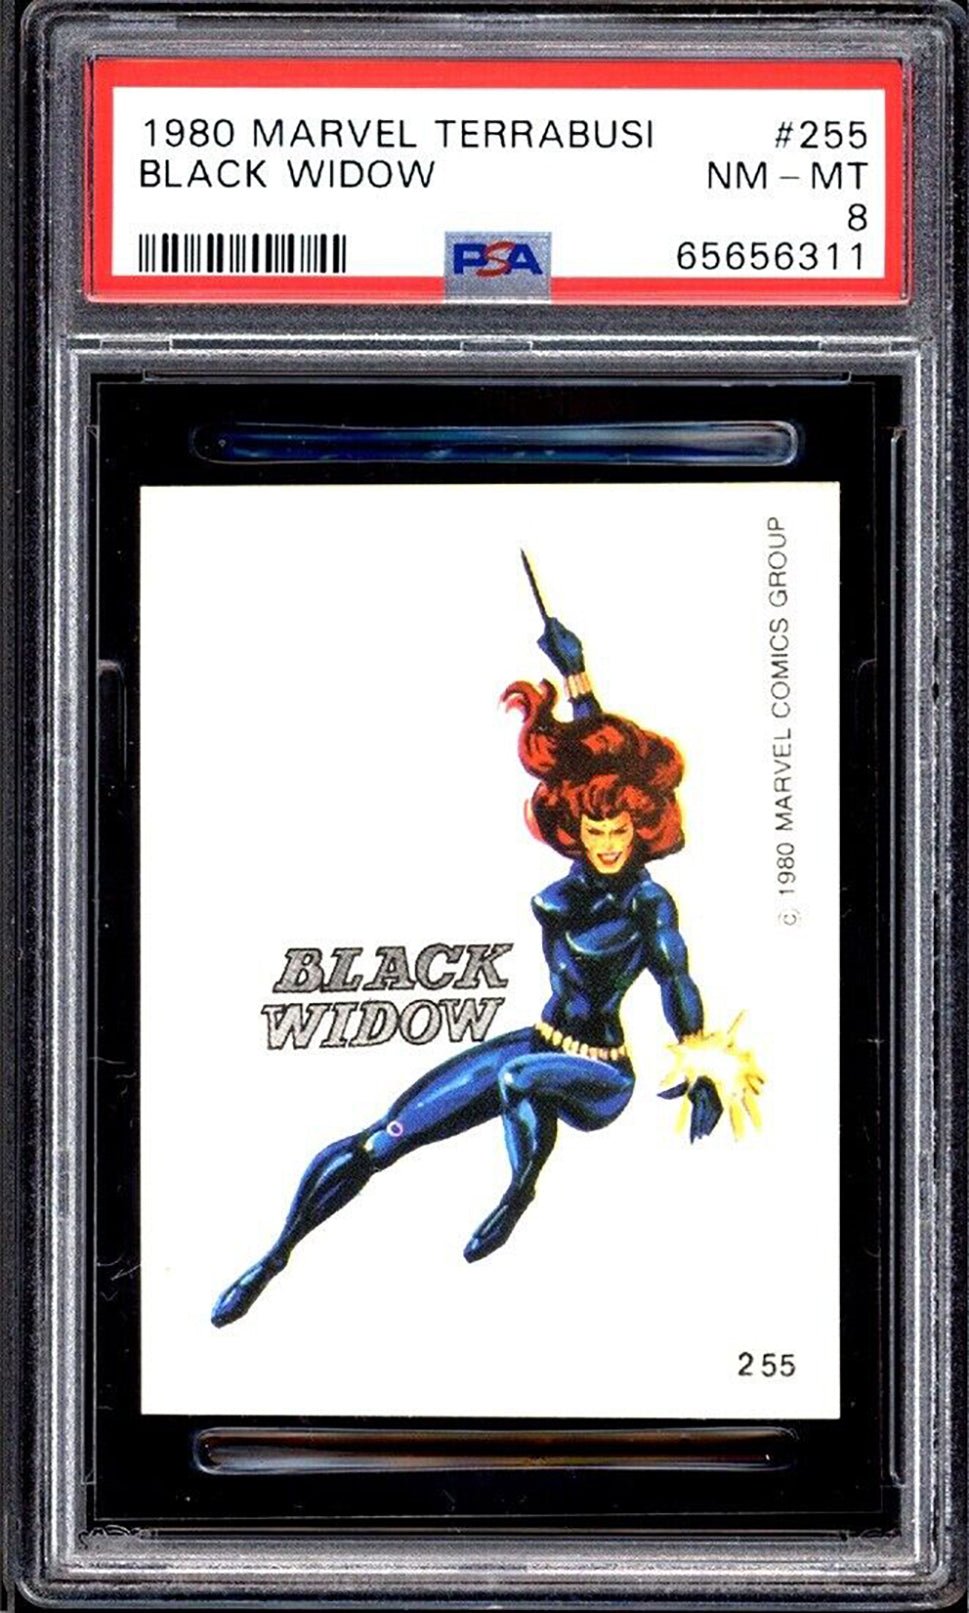 BLACK WIDOW PSA 8 1980 Marvel Terrabusi Sticker #255 Marvel Graded Cards Sticker - Hobby Gems